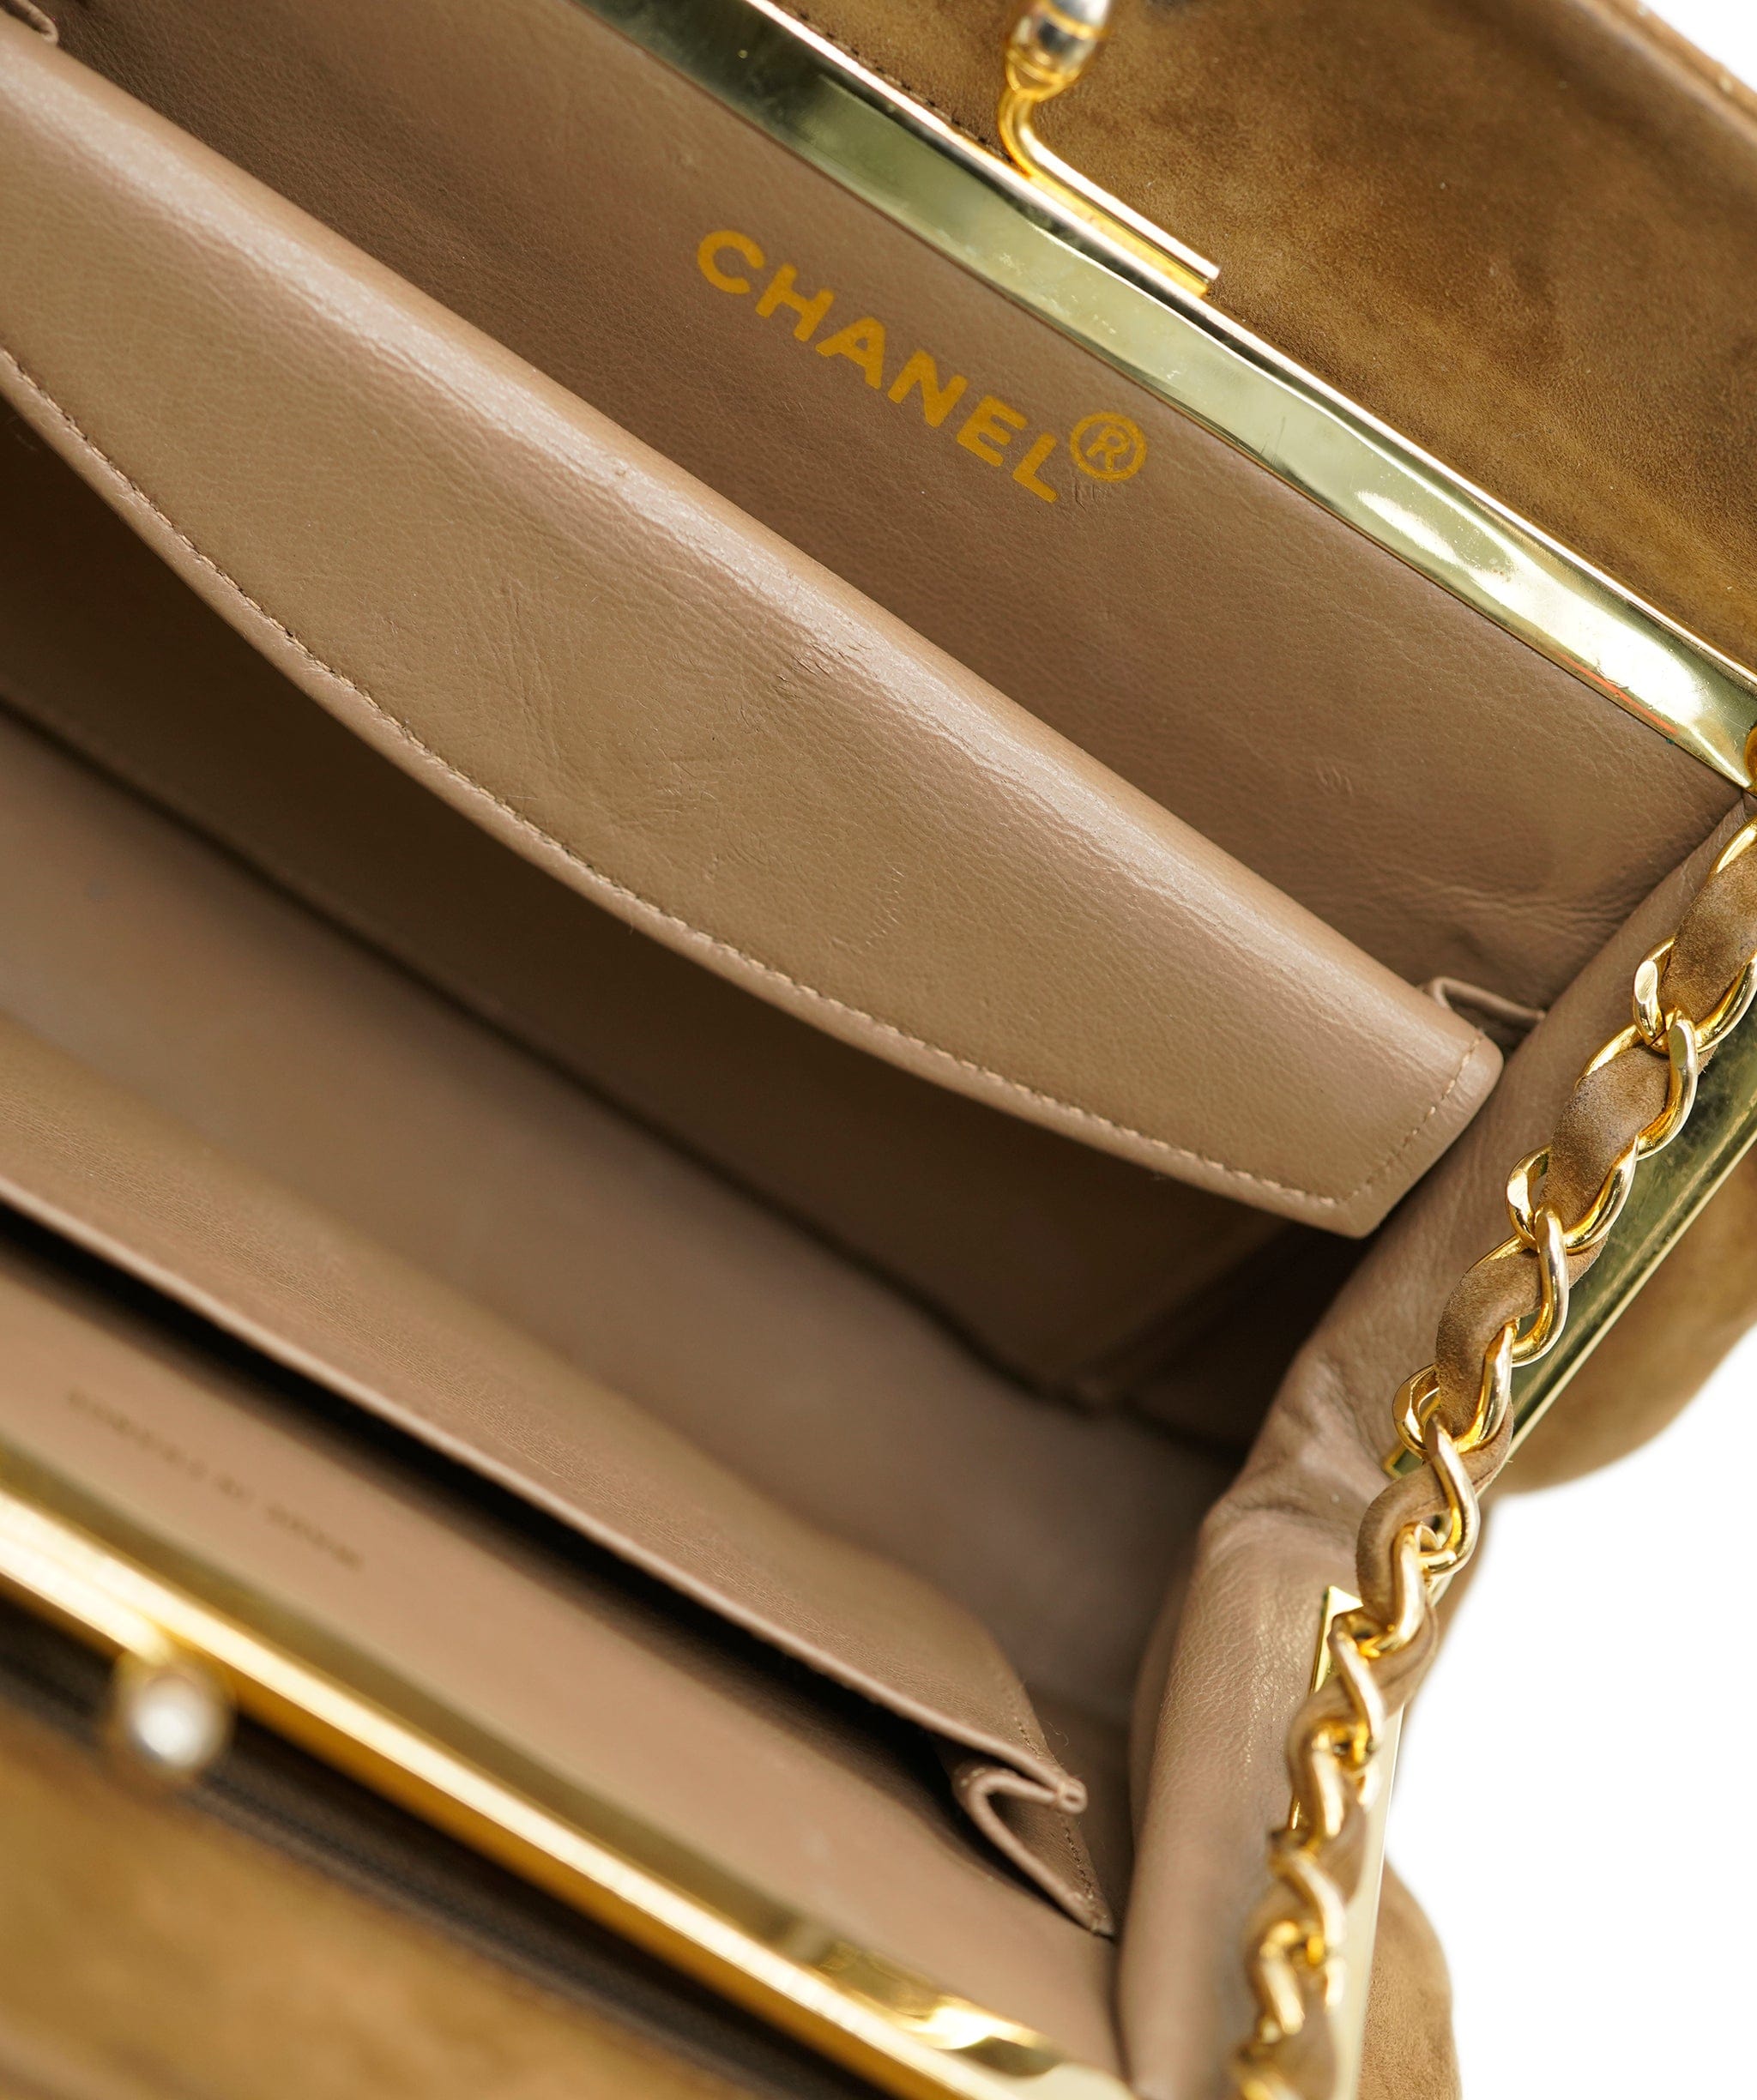 Chanel Chanel camel chevron suede shoulder bag with GHW AJL0176